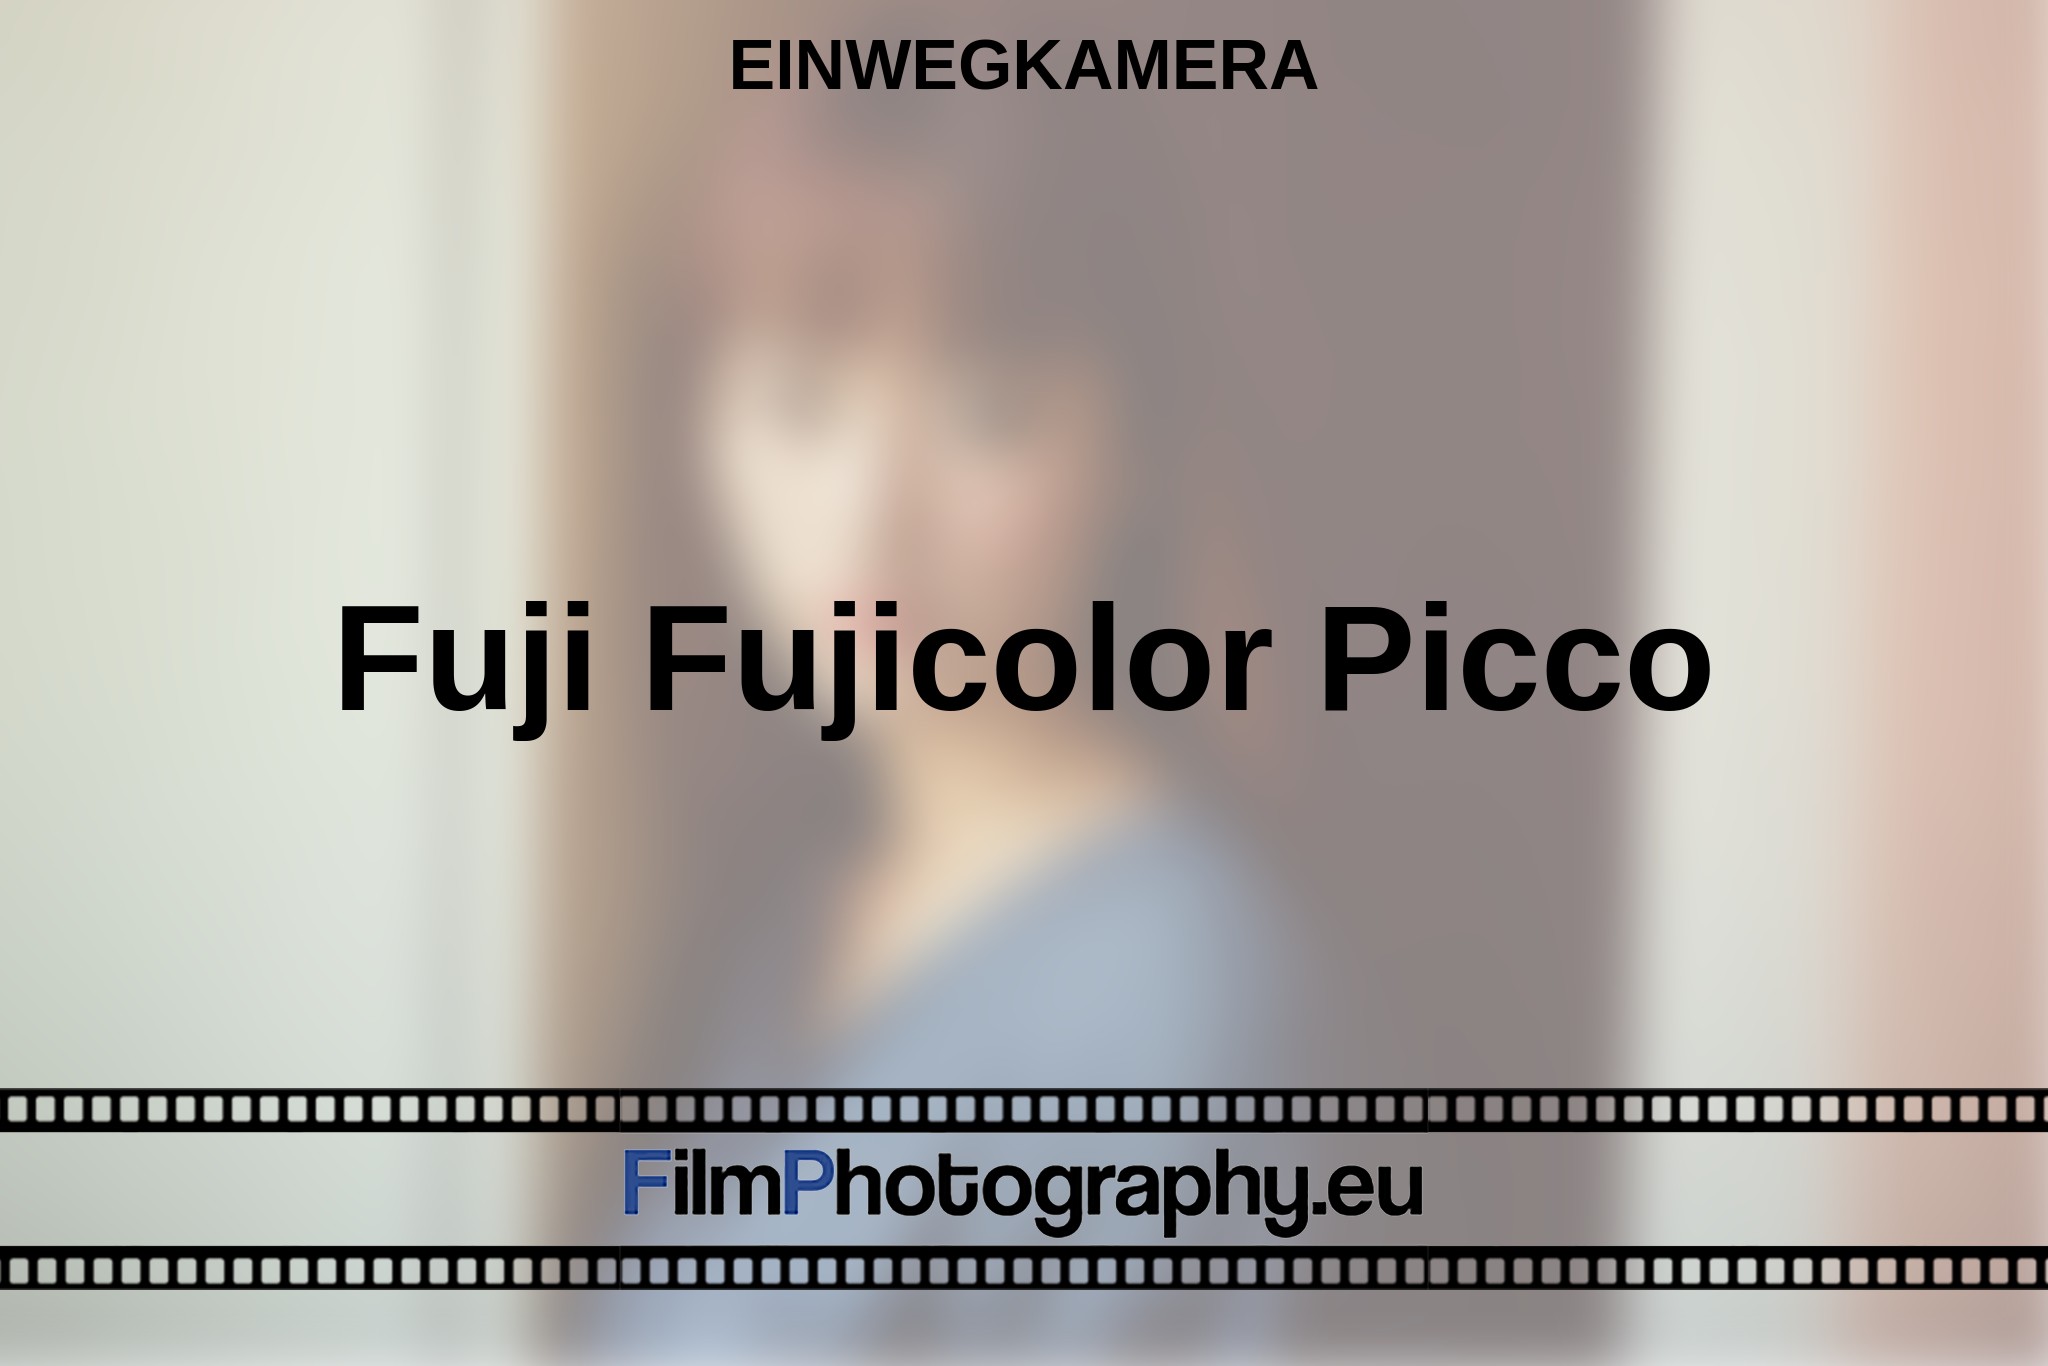 fuji-fujicolor-picco-einwegkamera-bnv.jpg